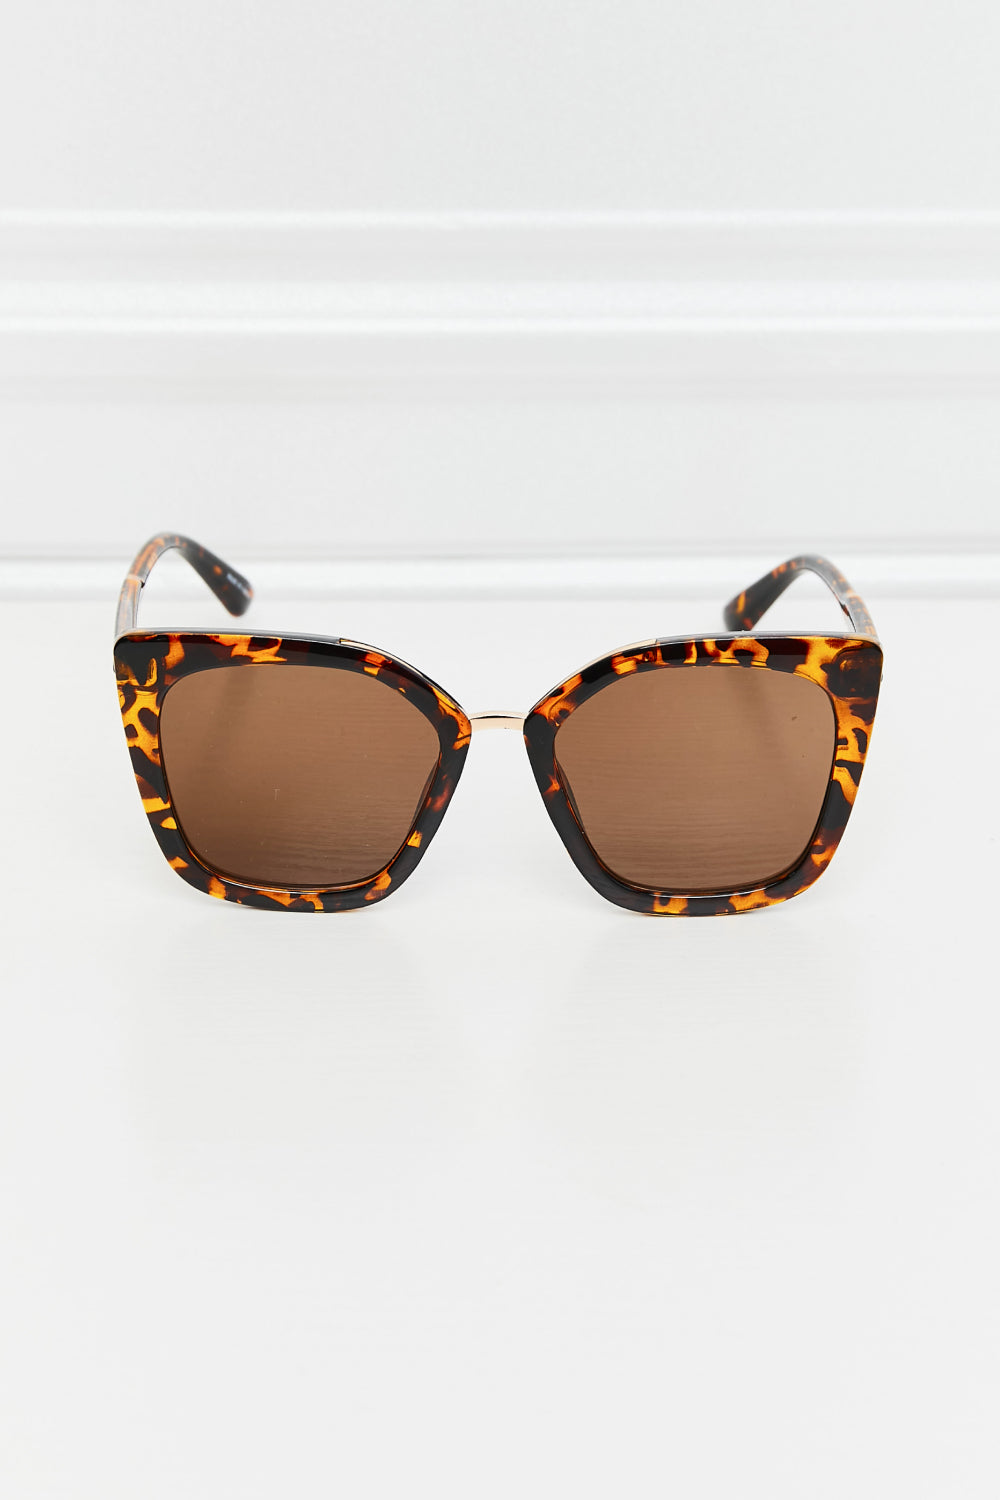 Cat Eye Full Rim Polycarbonate Sunglasses Print on any thing USA/STOD clothes